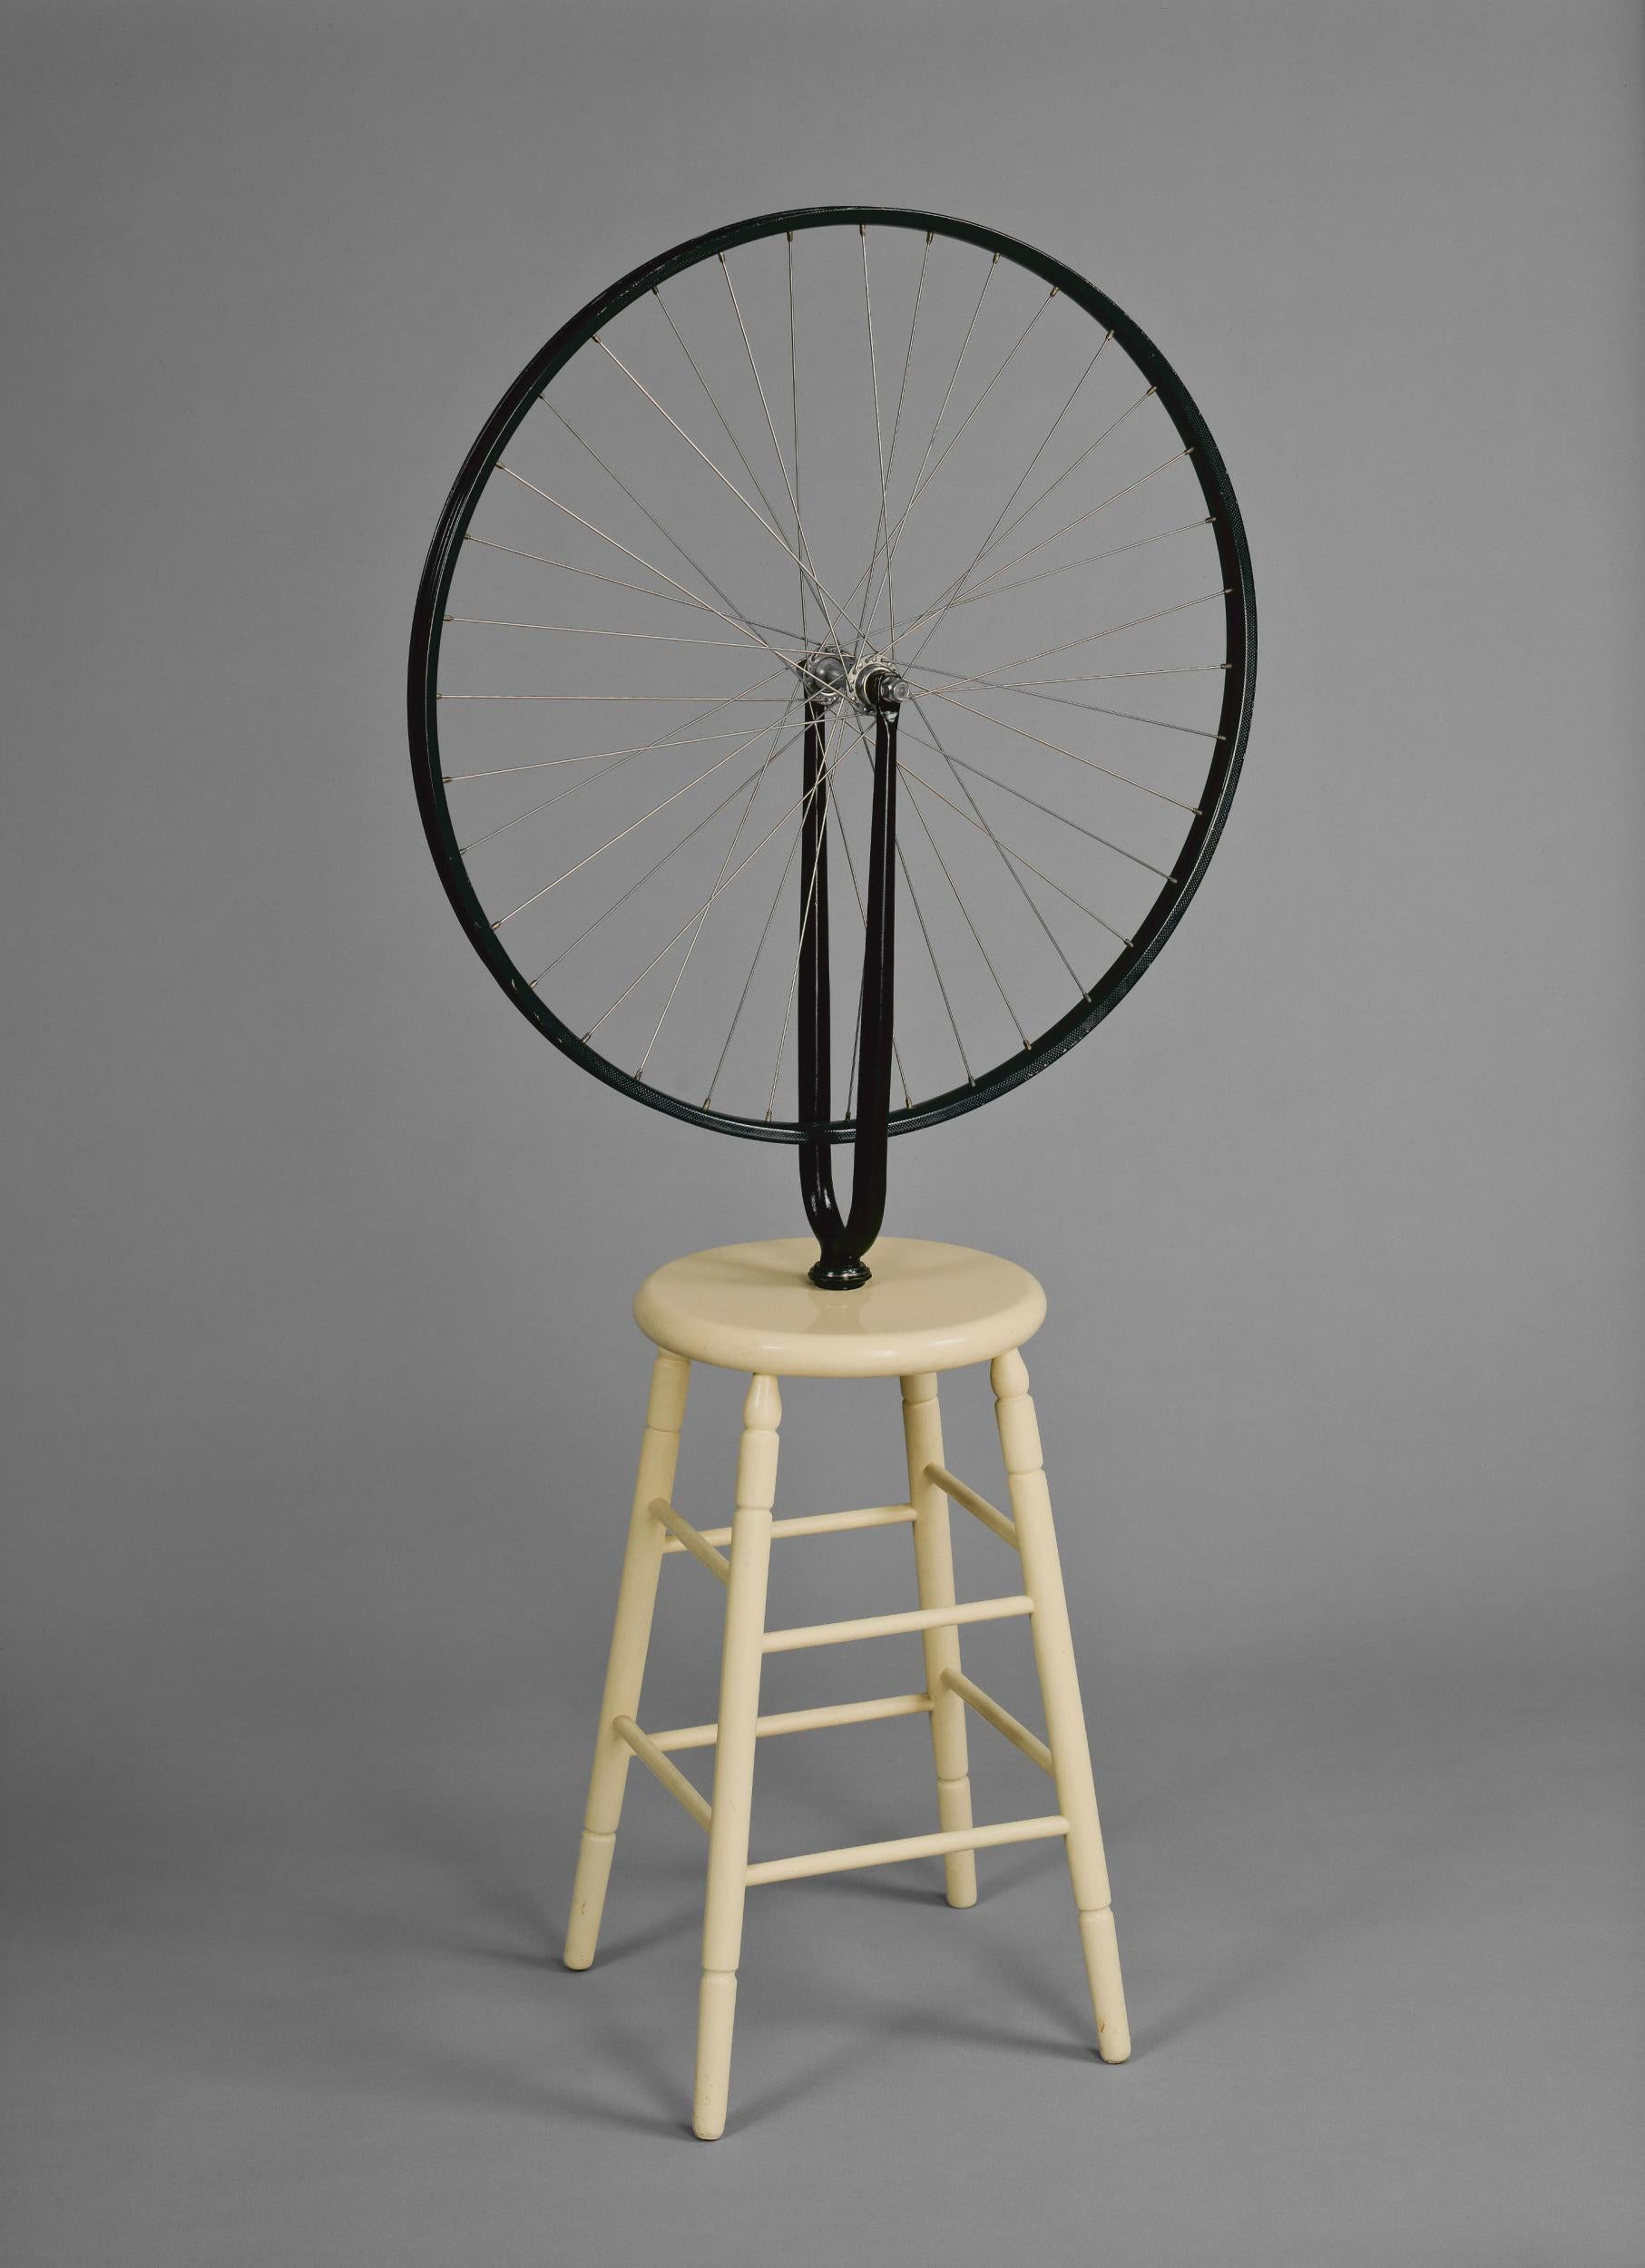 Marcel Duchamp, 'Bicycle Wheel', 1913, 6th version 1964 (Photo © Ottawa, National Gallery of Canada / © Succession Marcel Duchamp/ADAGP, Paris and DACS, London 2017)